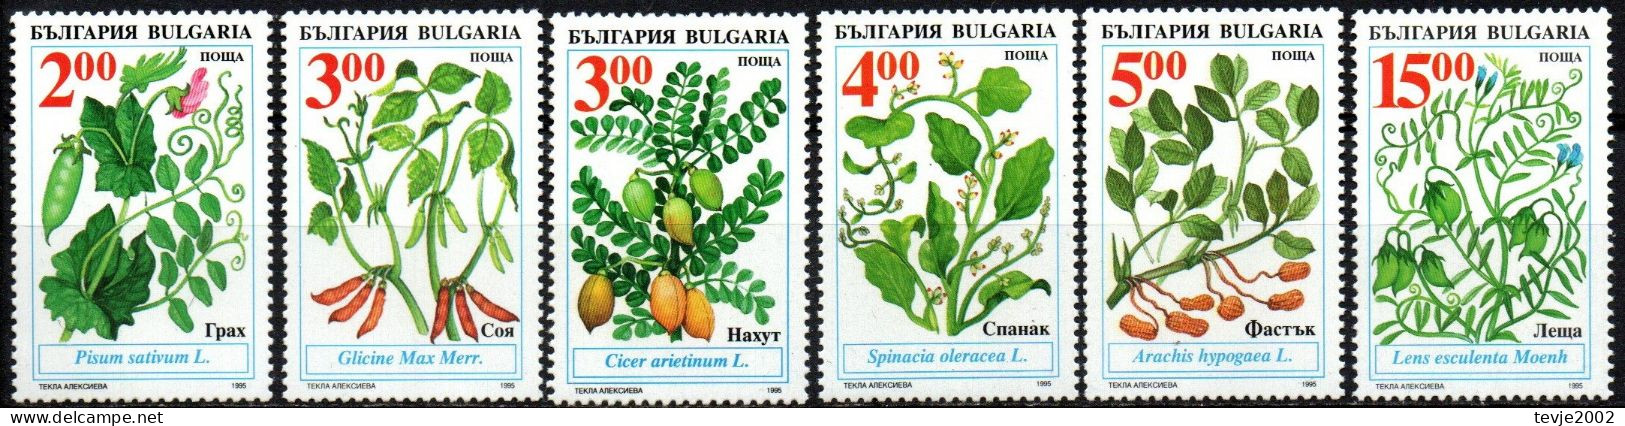 Bulgarien 1995 - Mi.Nr. 4168 - 4173 - Postfrisch MNH - Pflanzen Plants Gemüse Crops - Gemüse